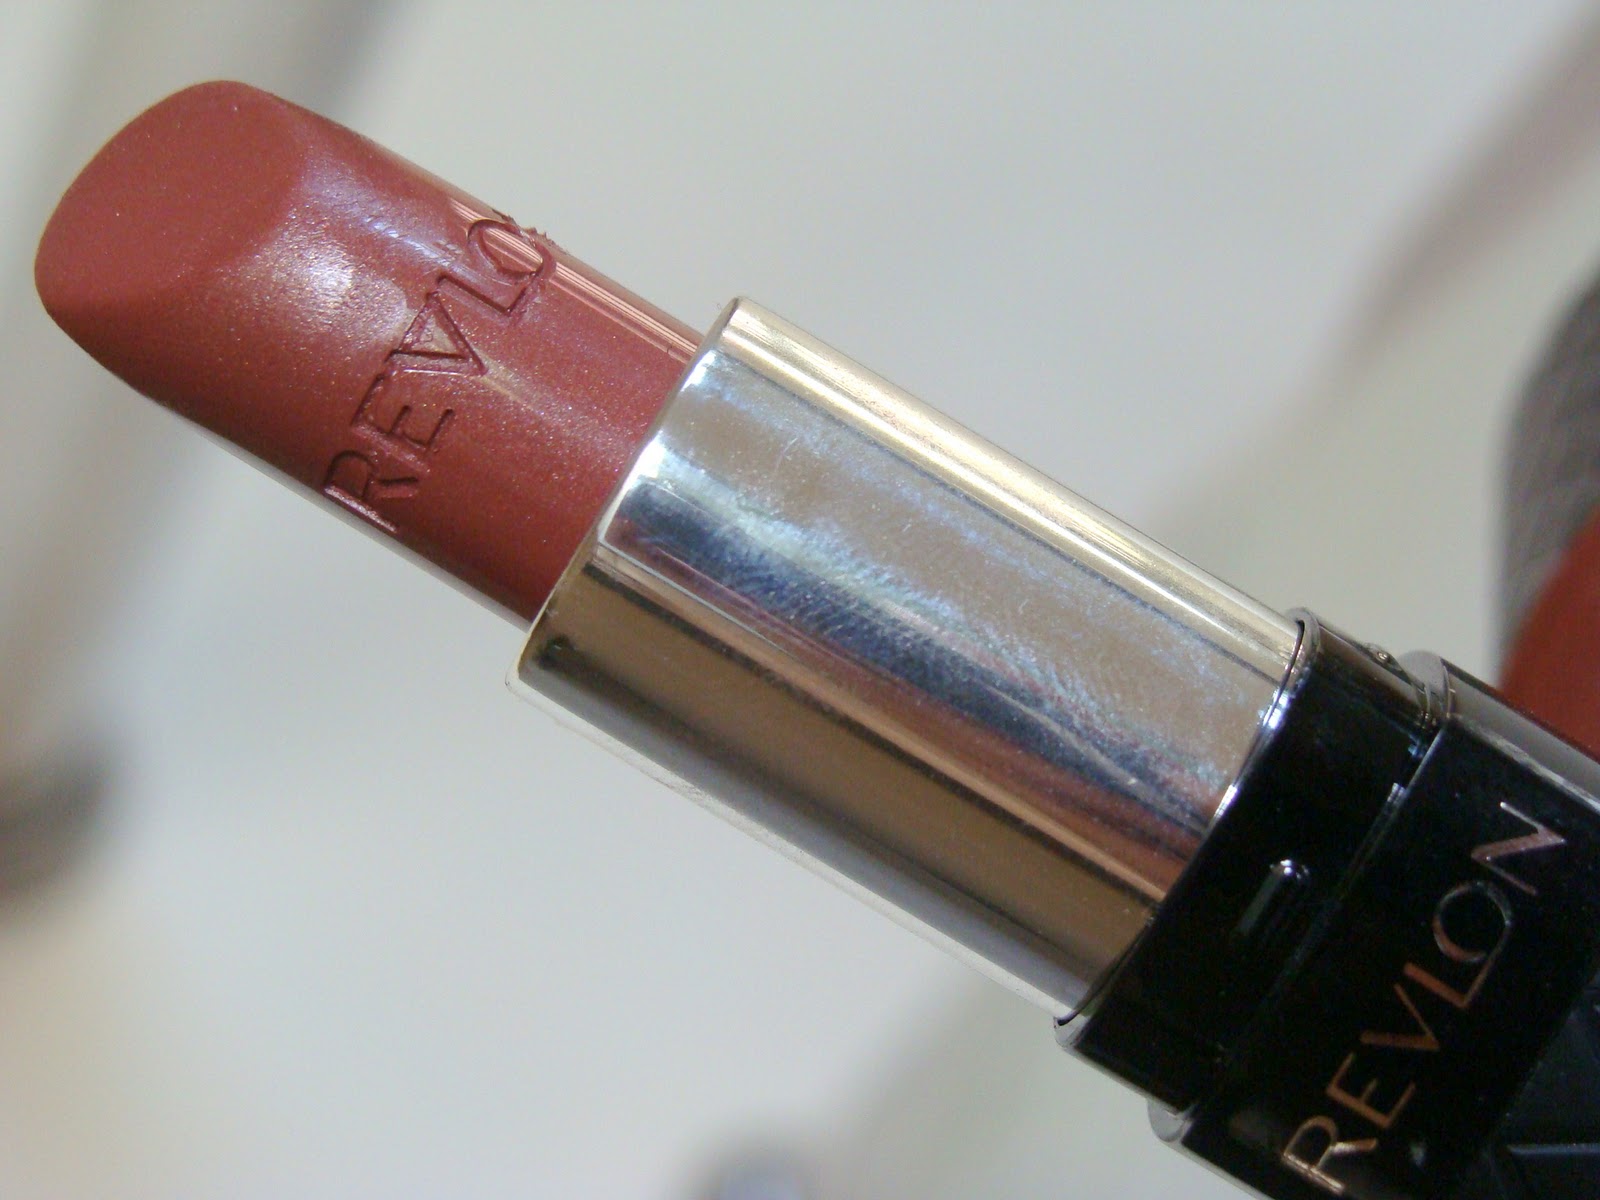 Revlon Colorburst Lipstick in Hazelnut: Swatch, Review